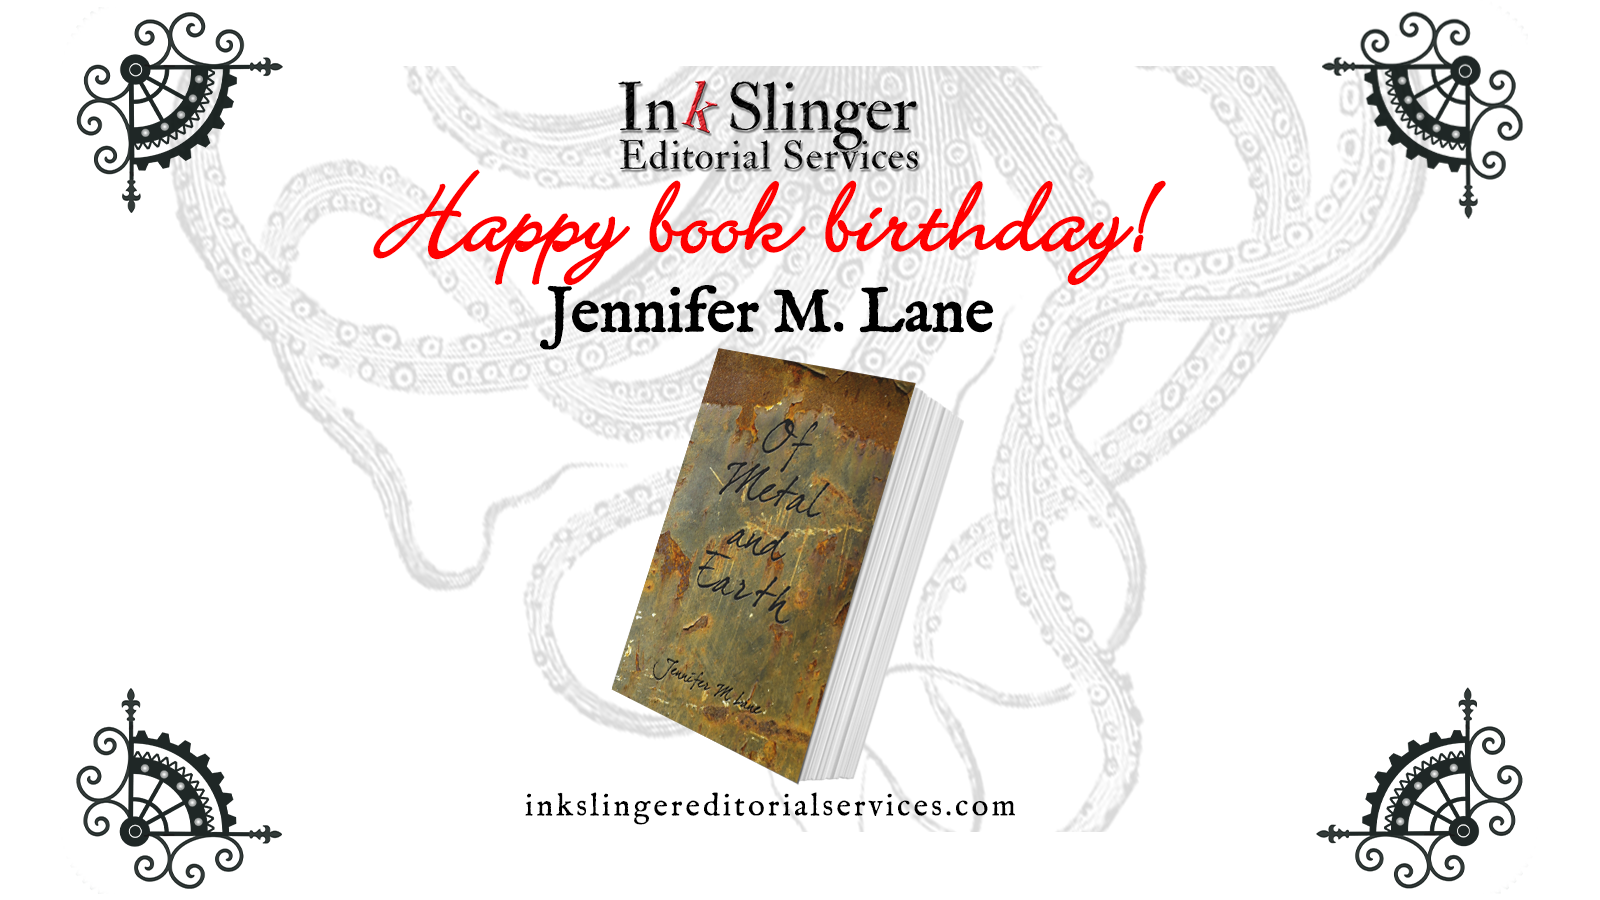 Happy book birthday to Jennifer M. Lane!